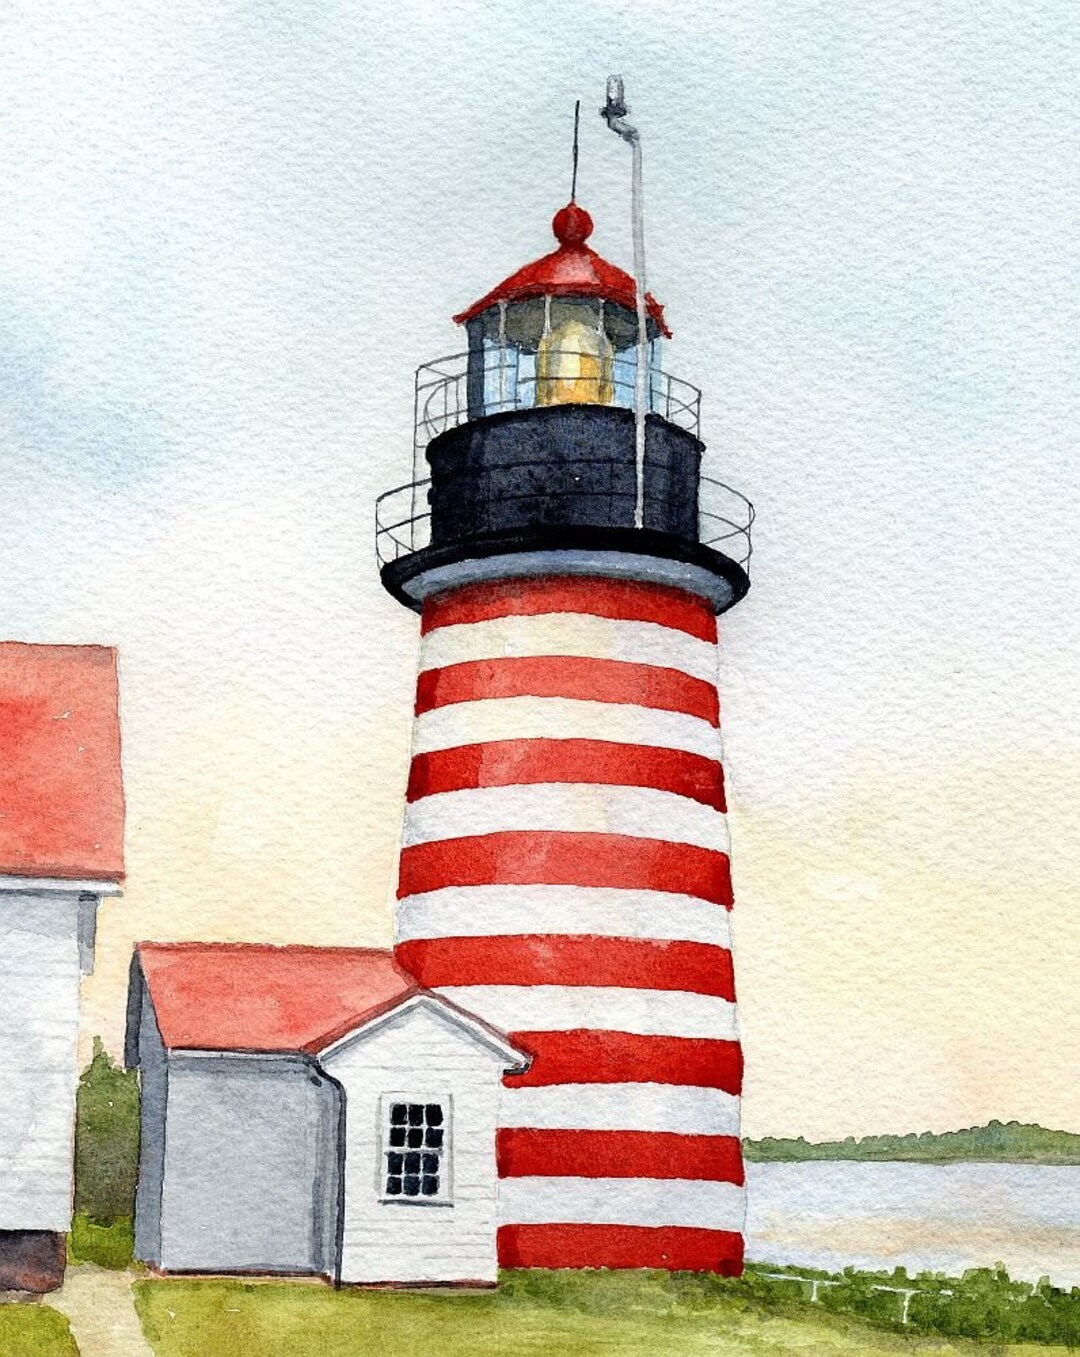 West Quoddy Head Lighthouse Shower Curtain by Barbara Landry - Barbara  Landry - Artist Website